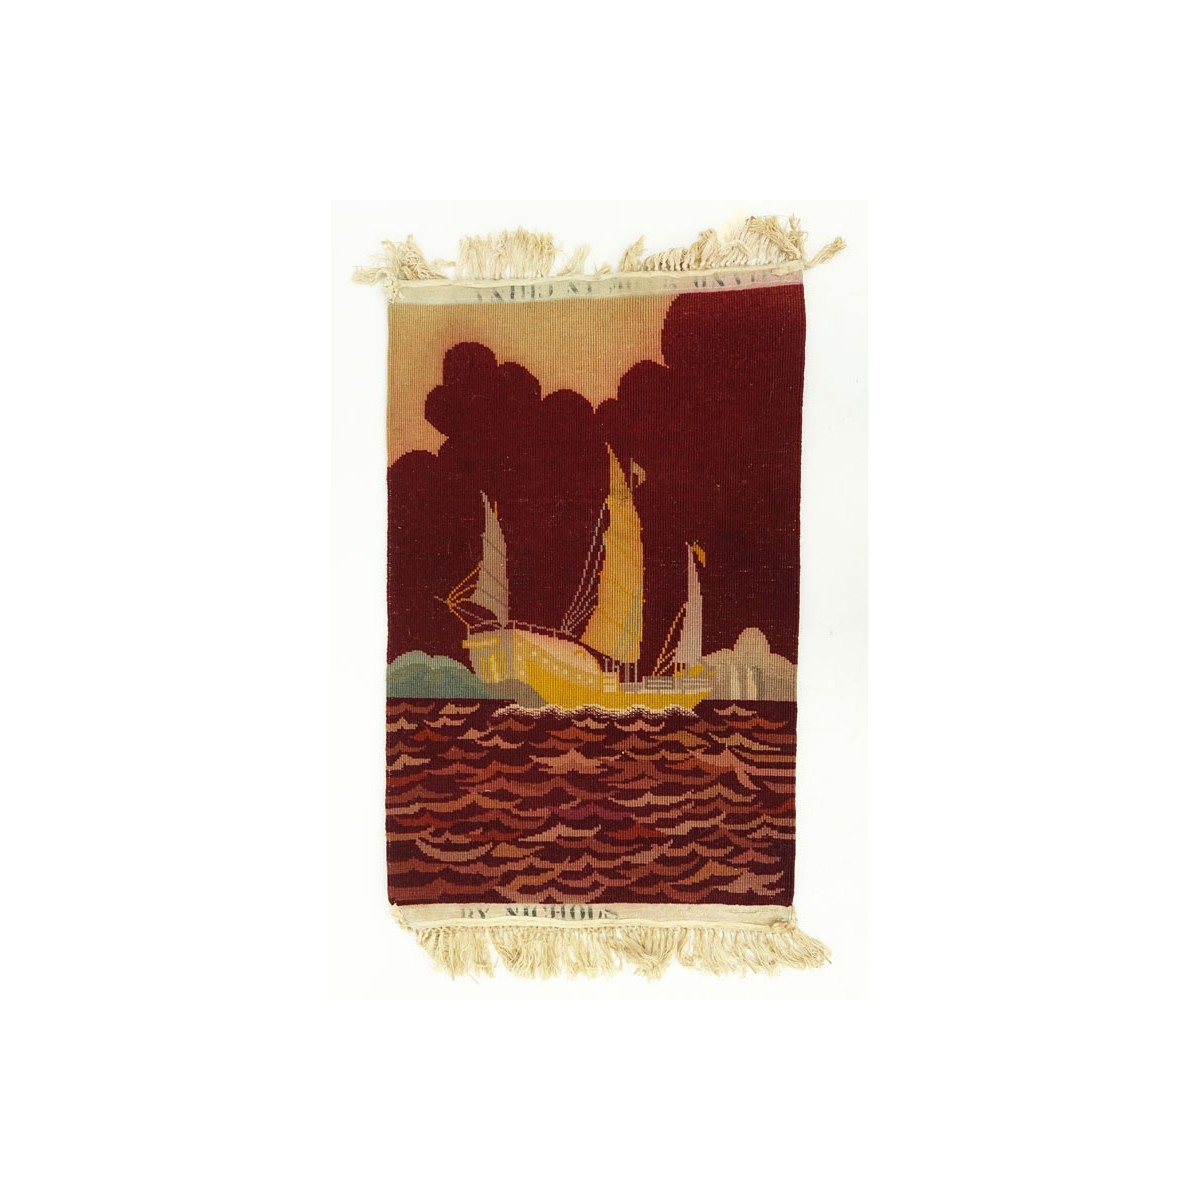 Circa 1920s Walter Nichols Nautical Scene Oriental Rug. Burgundy